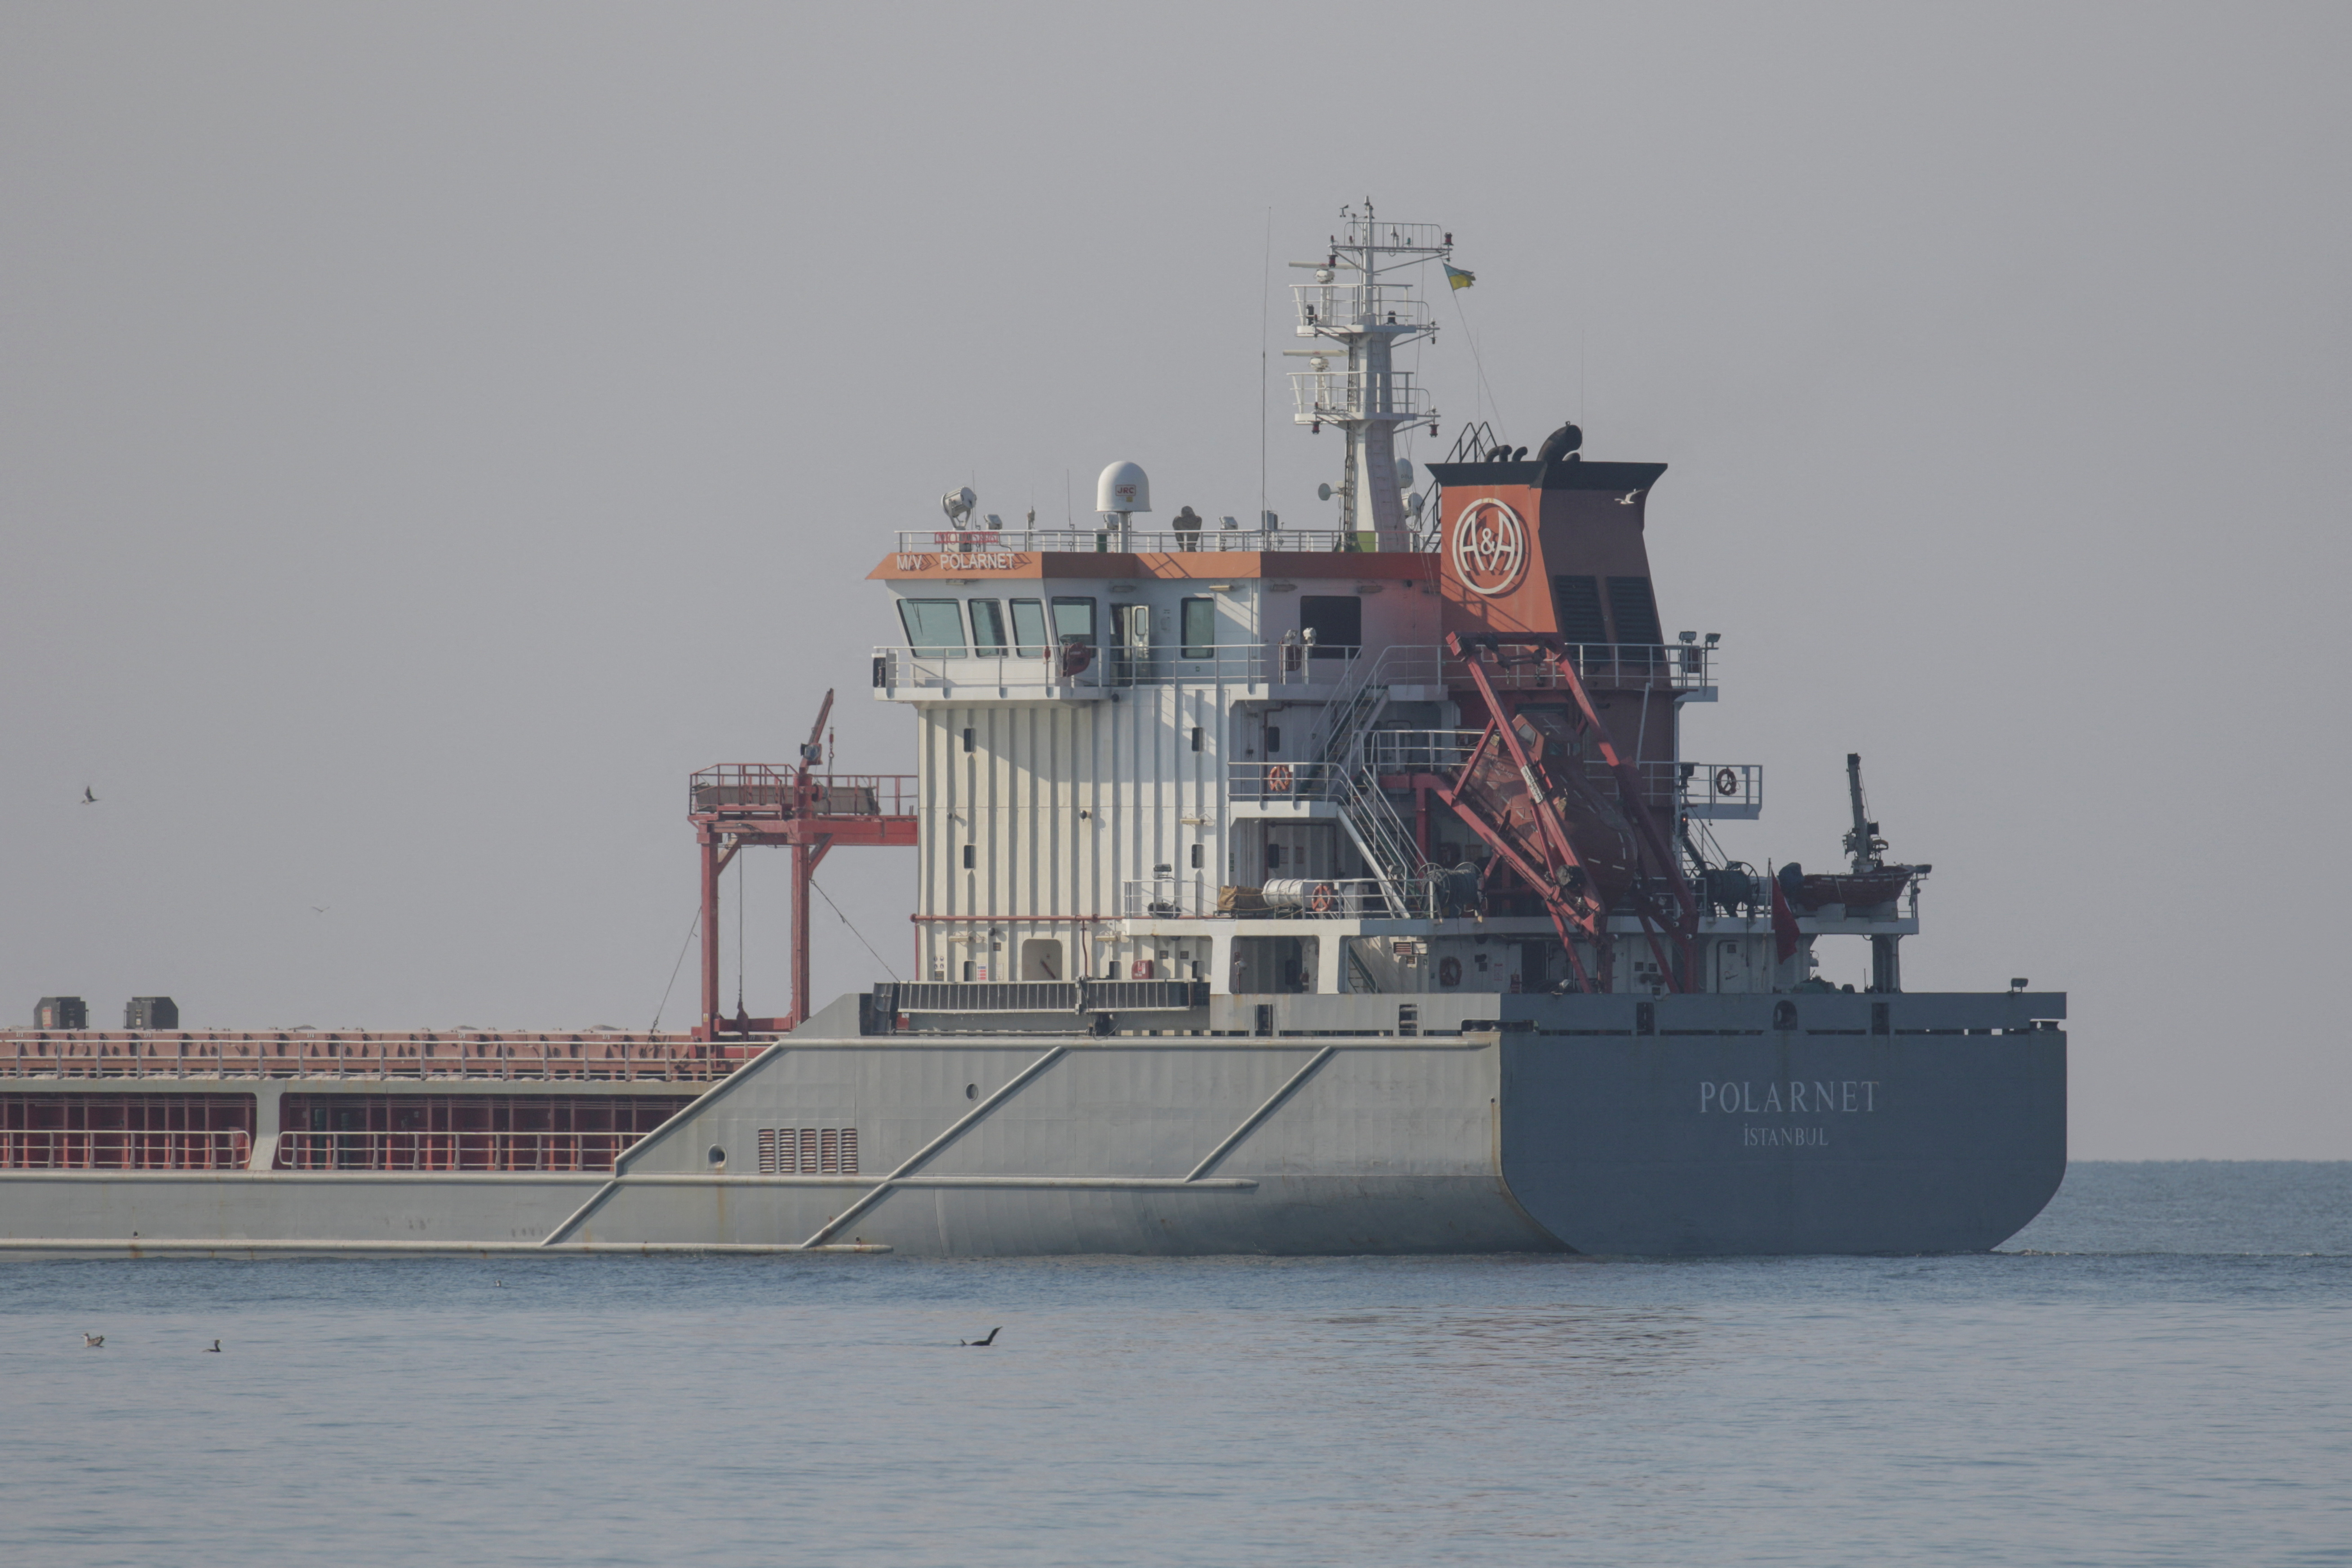 The cargo ship Polarnet leaves the sea port in Chornomorsk